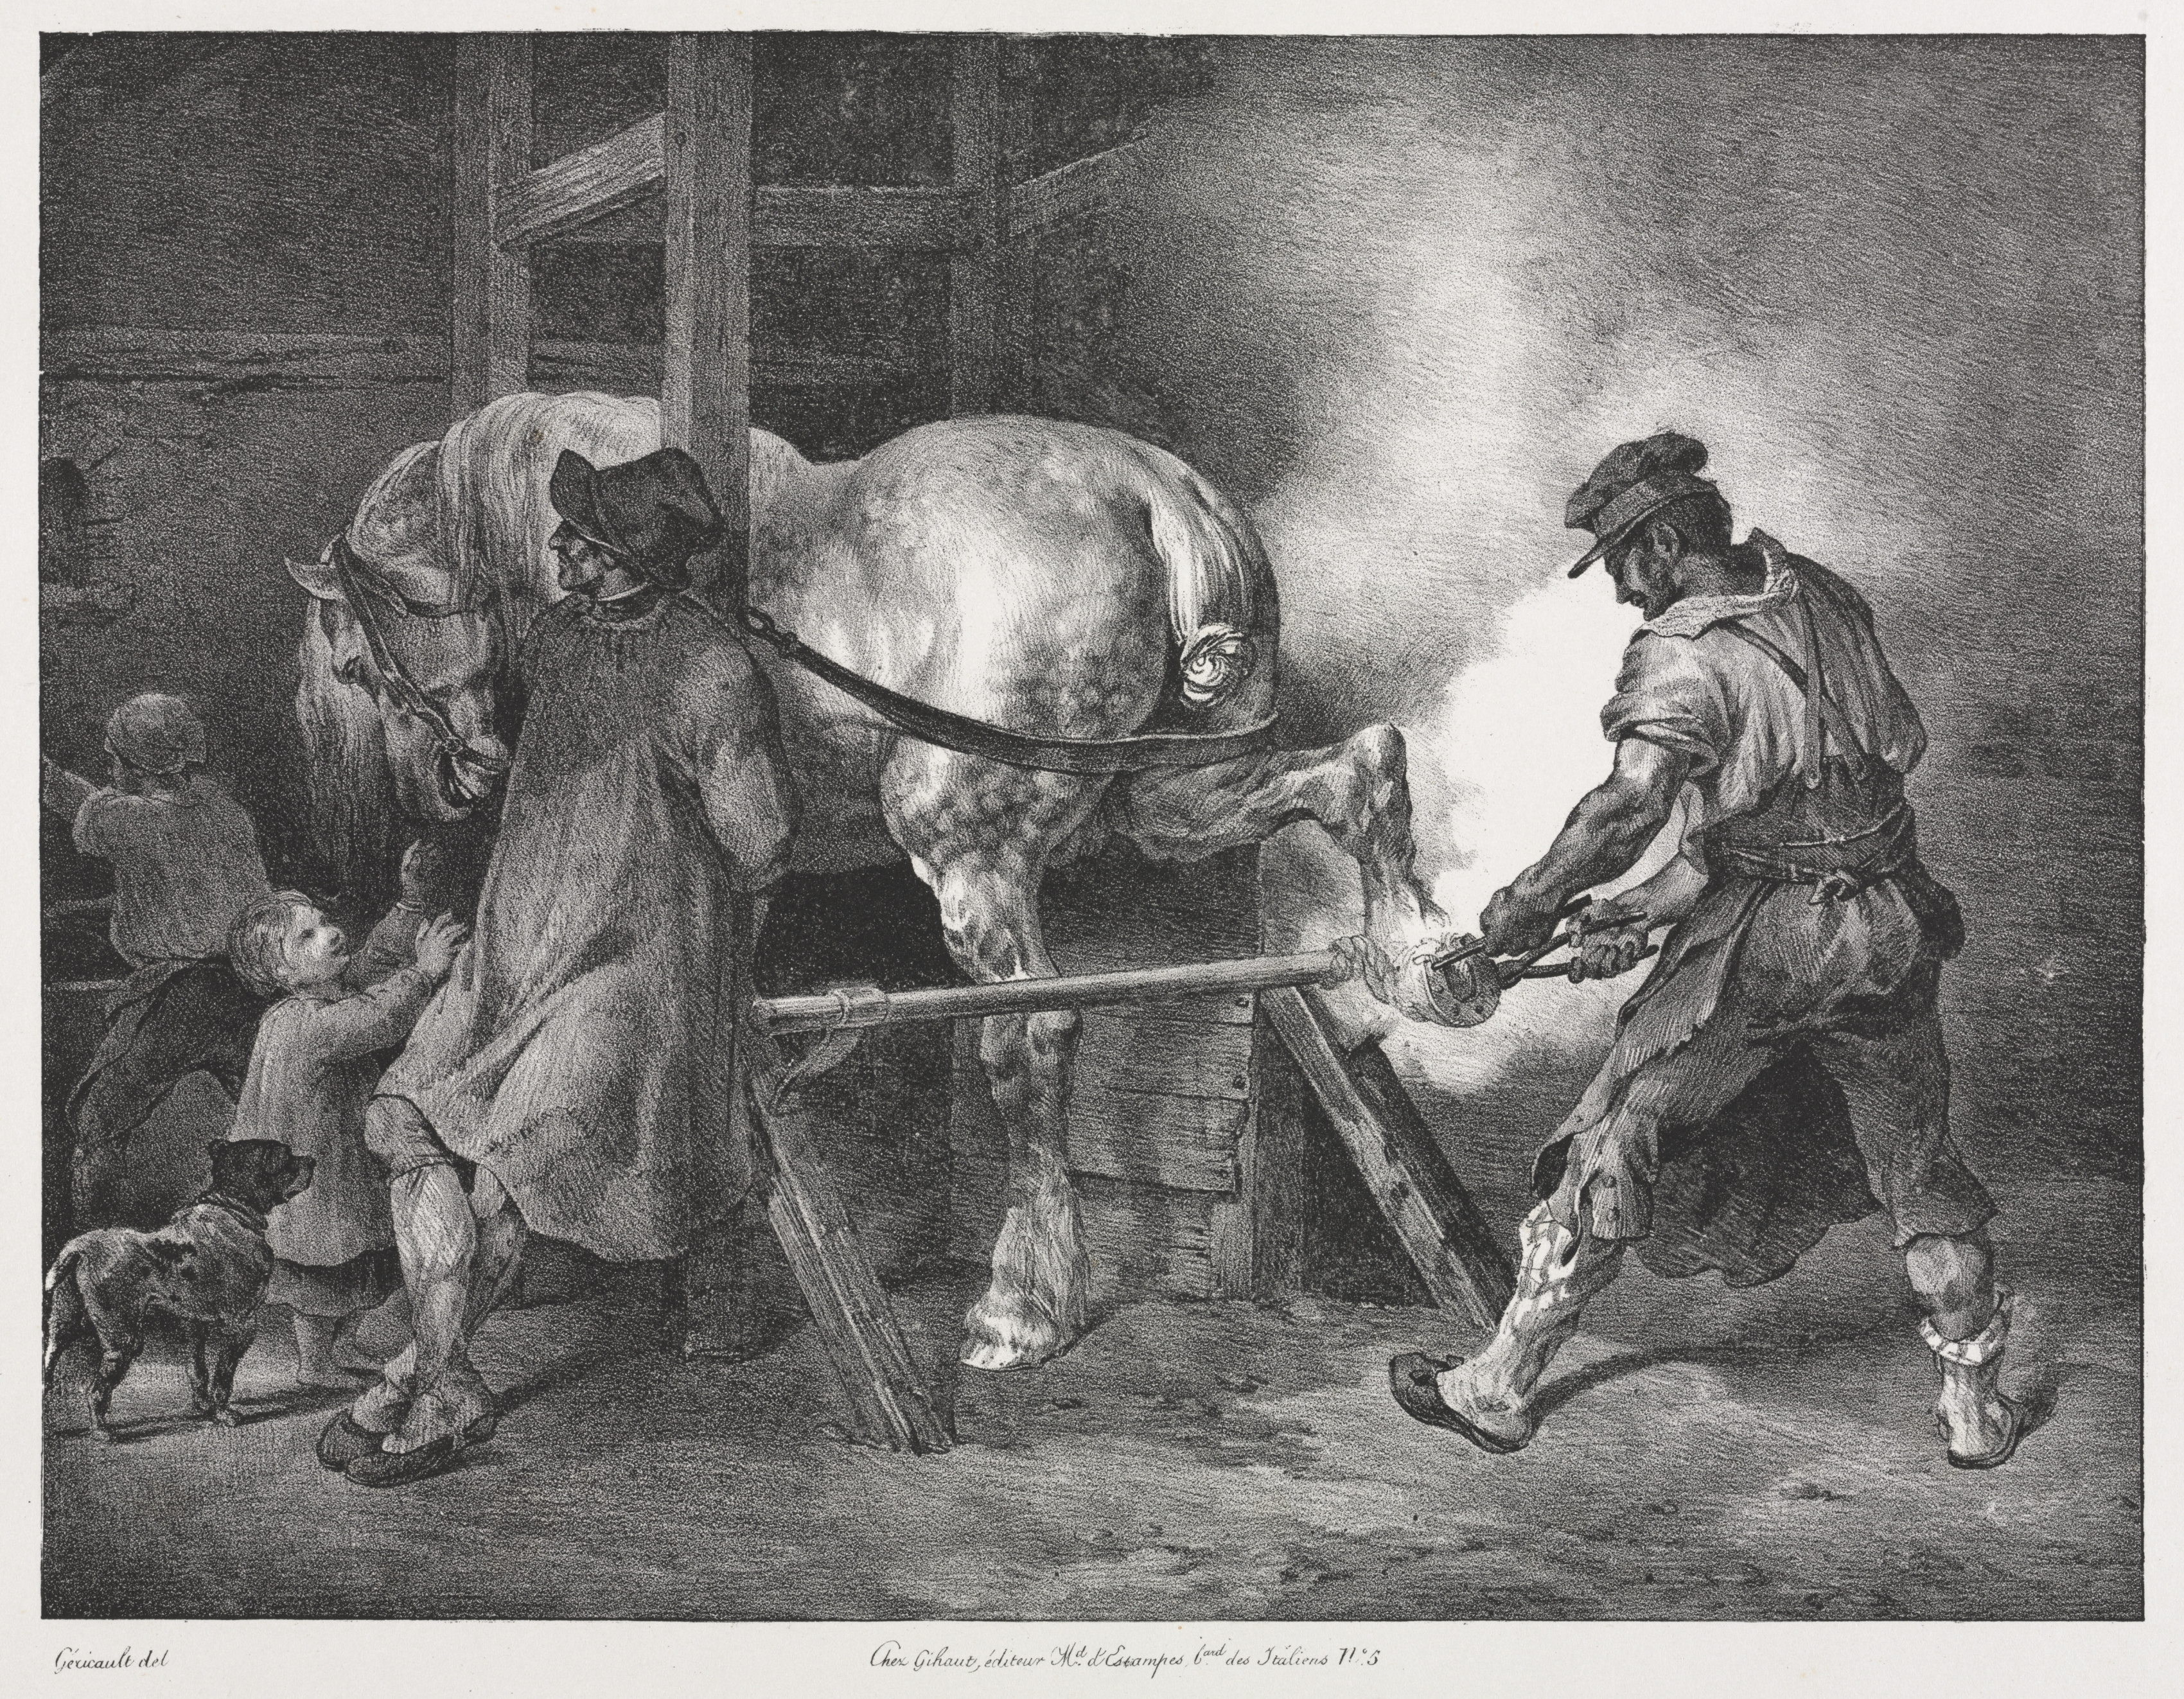 The Flemish Blacksmith